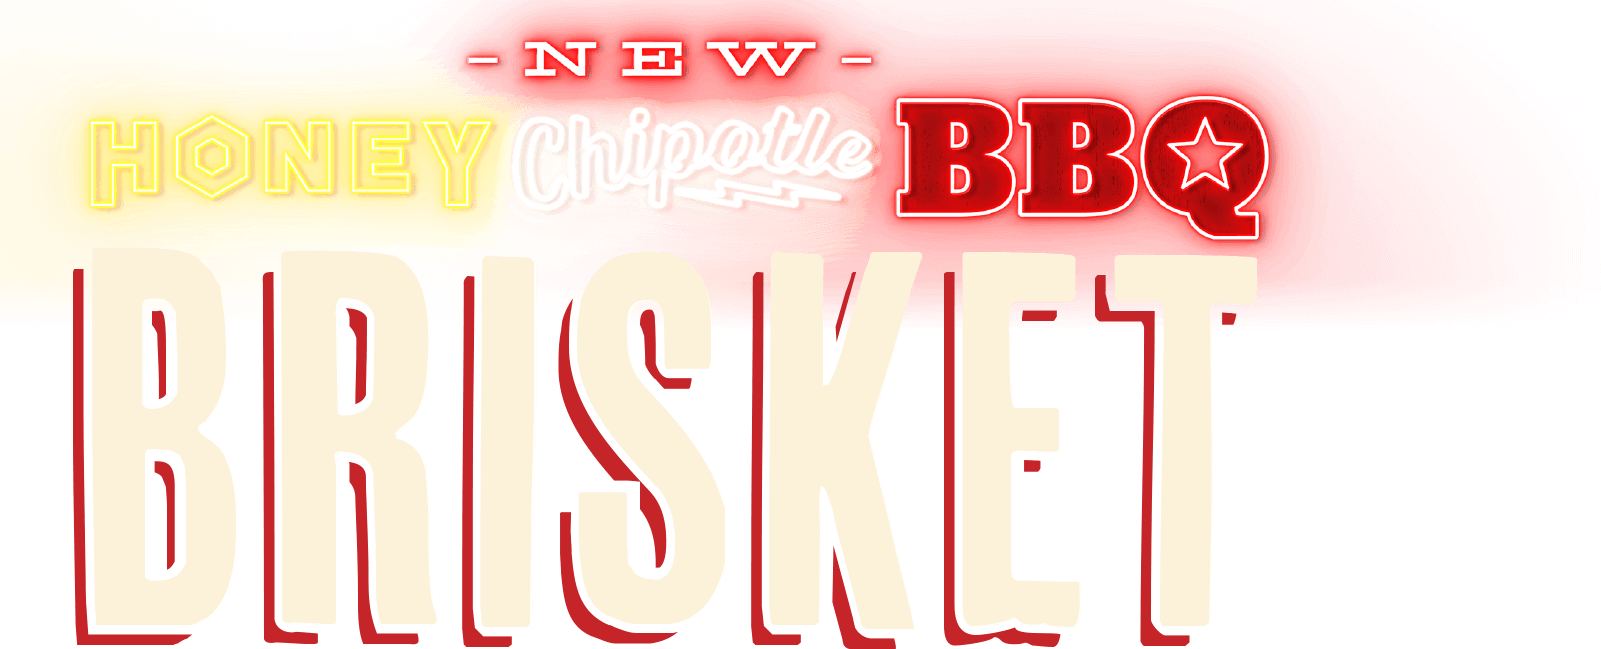 New Honey Chipotle BBQ Brisket